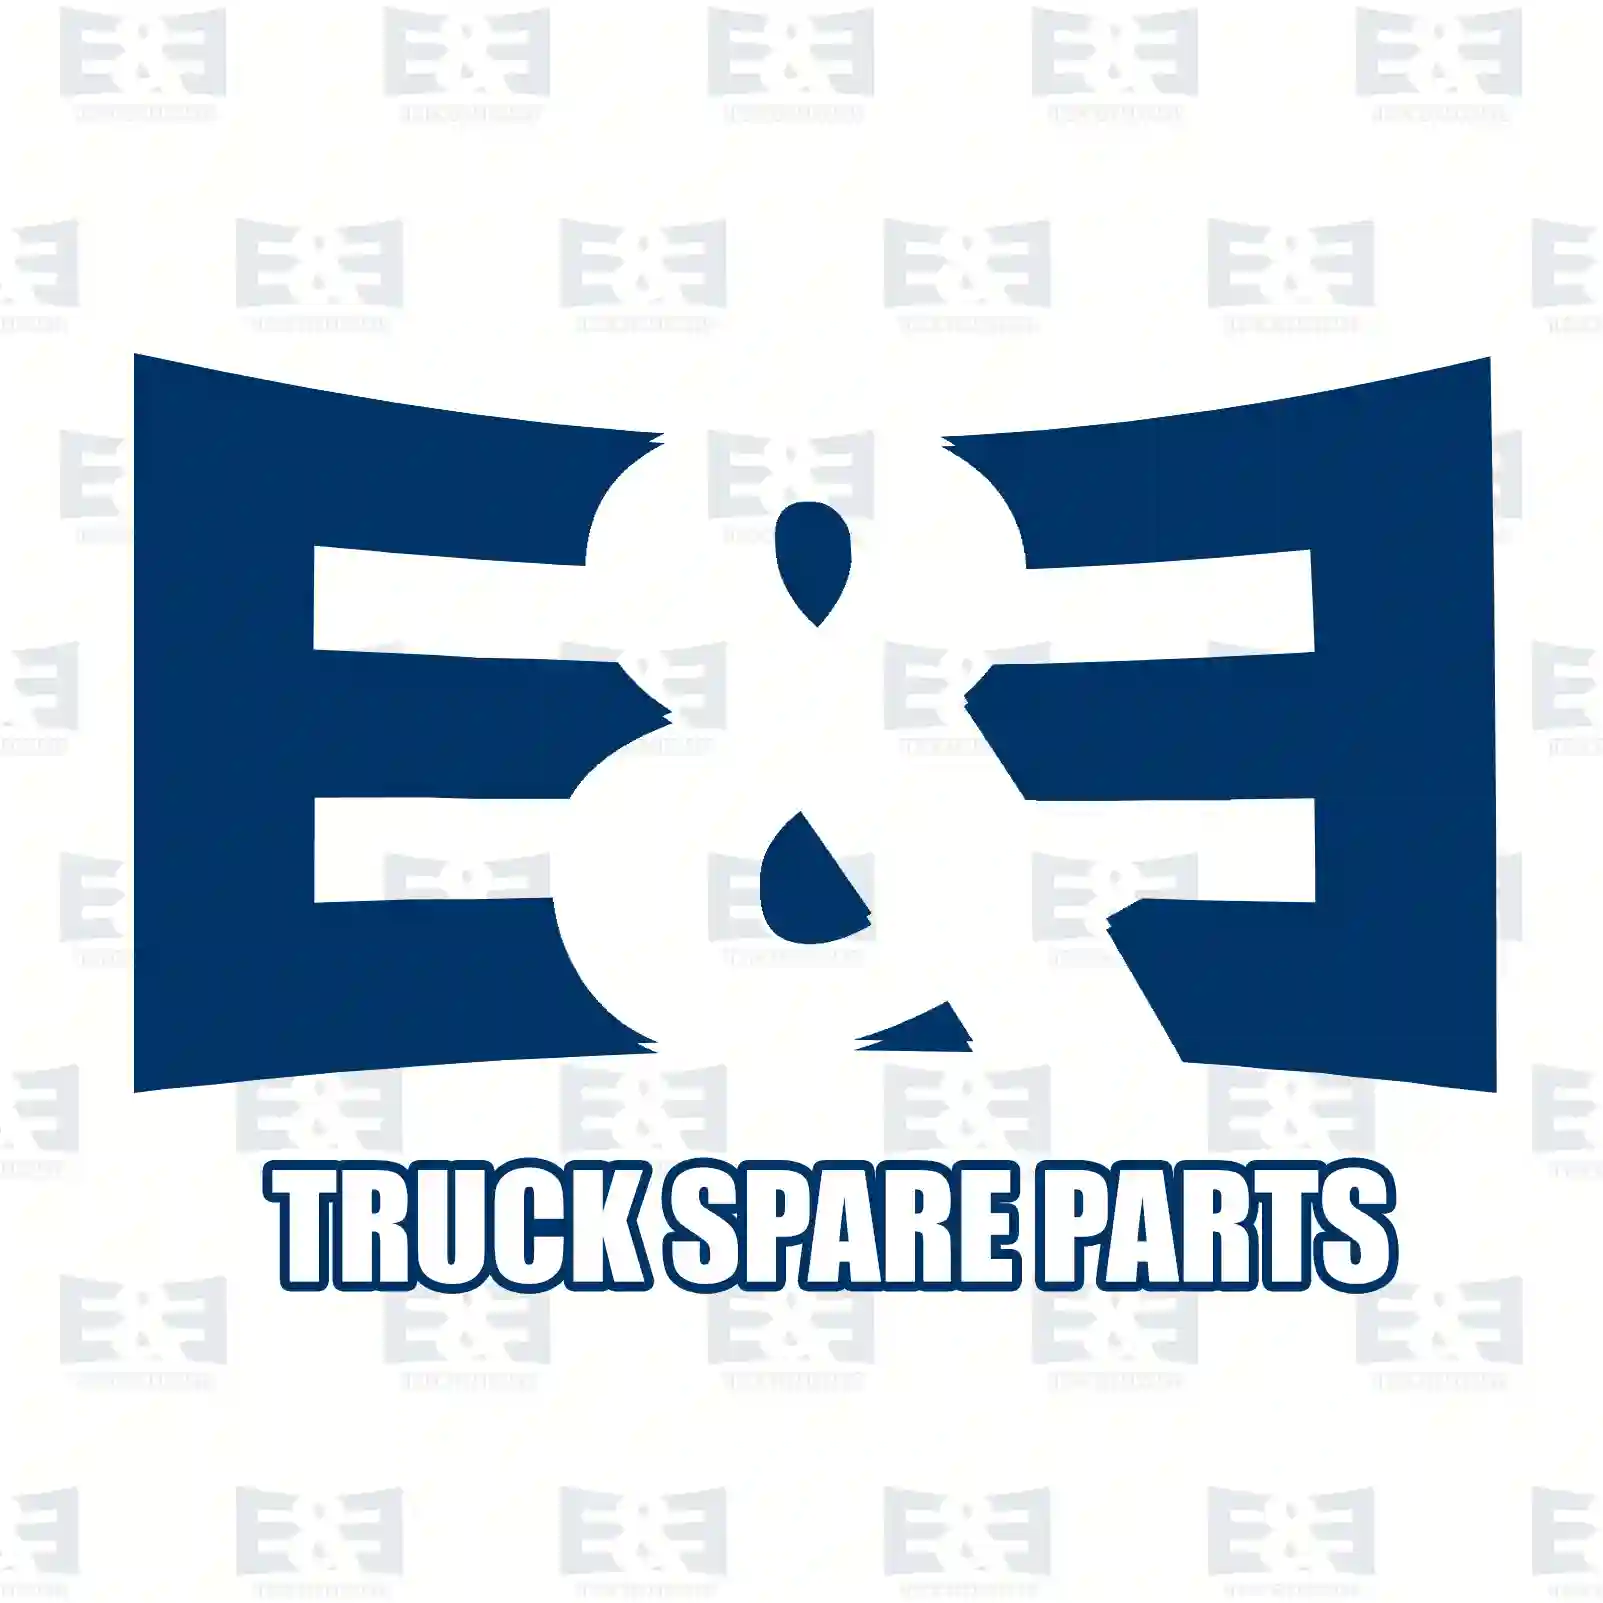  Spider pinion || E&E Truck Spare Parts | Truck Spare Parts, Auotomotive Spare Parts